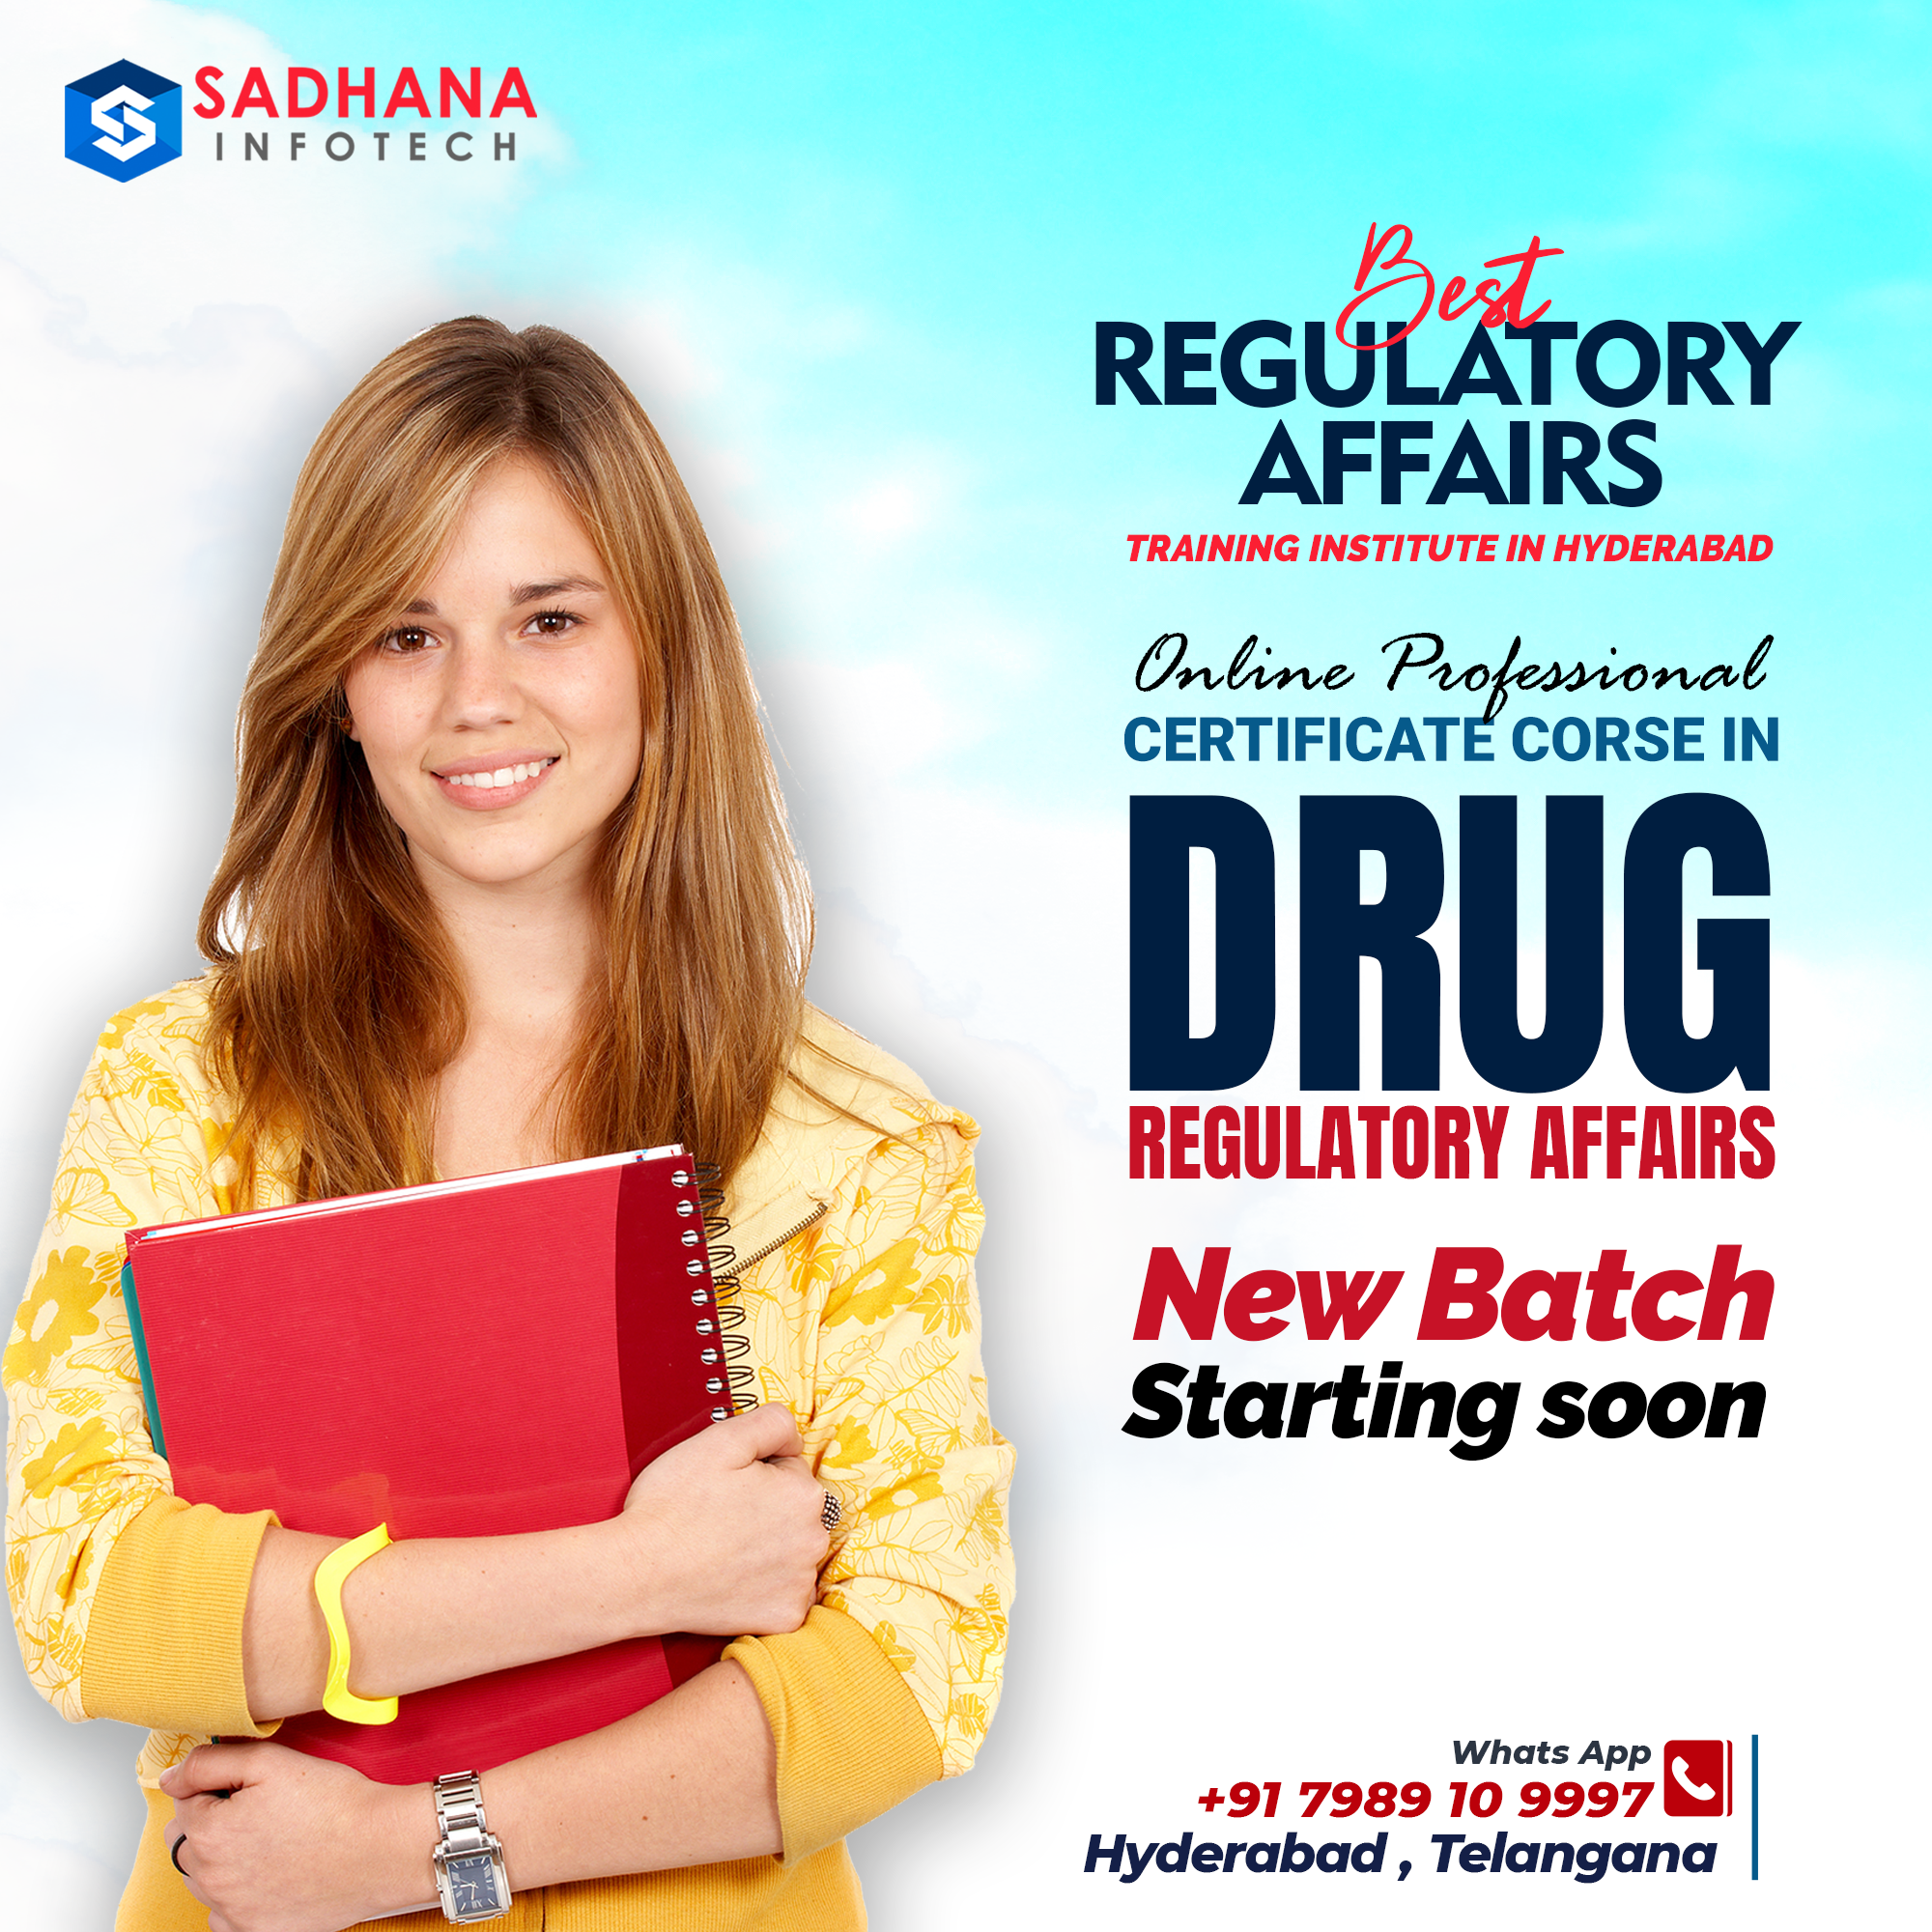 Drug regulatory affairs training in Hyderabad 